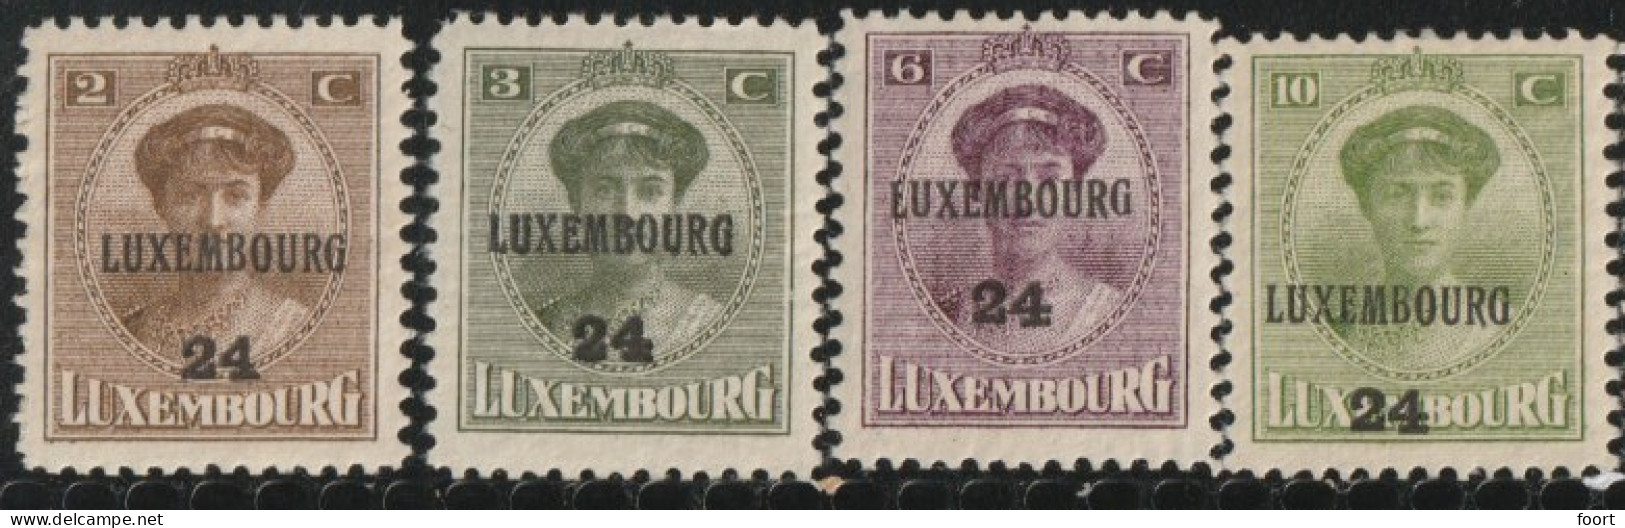 Lixembourg  1924  Prifix Nr. 137 T/m 144  Pf/mnh - Preobliterati